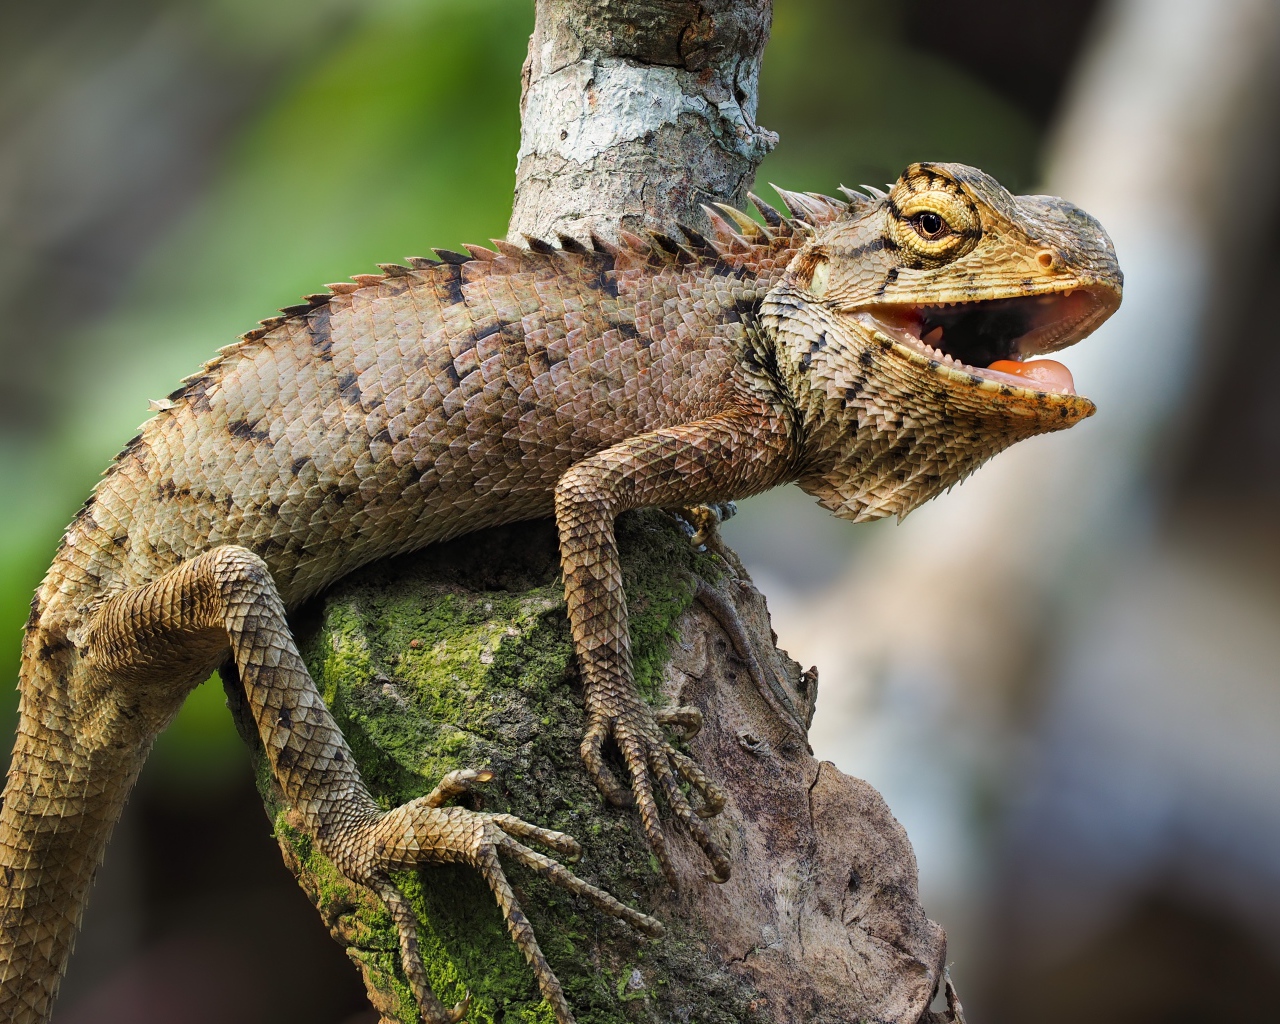 Big angry iguana sits on dry tree